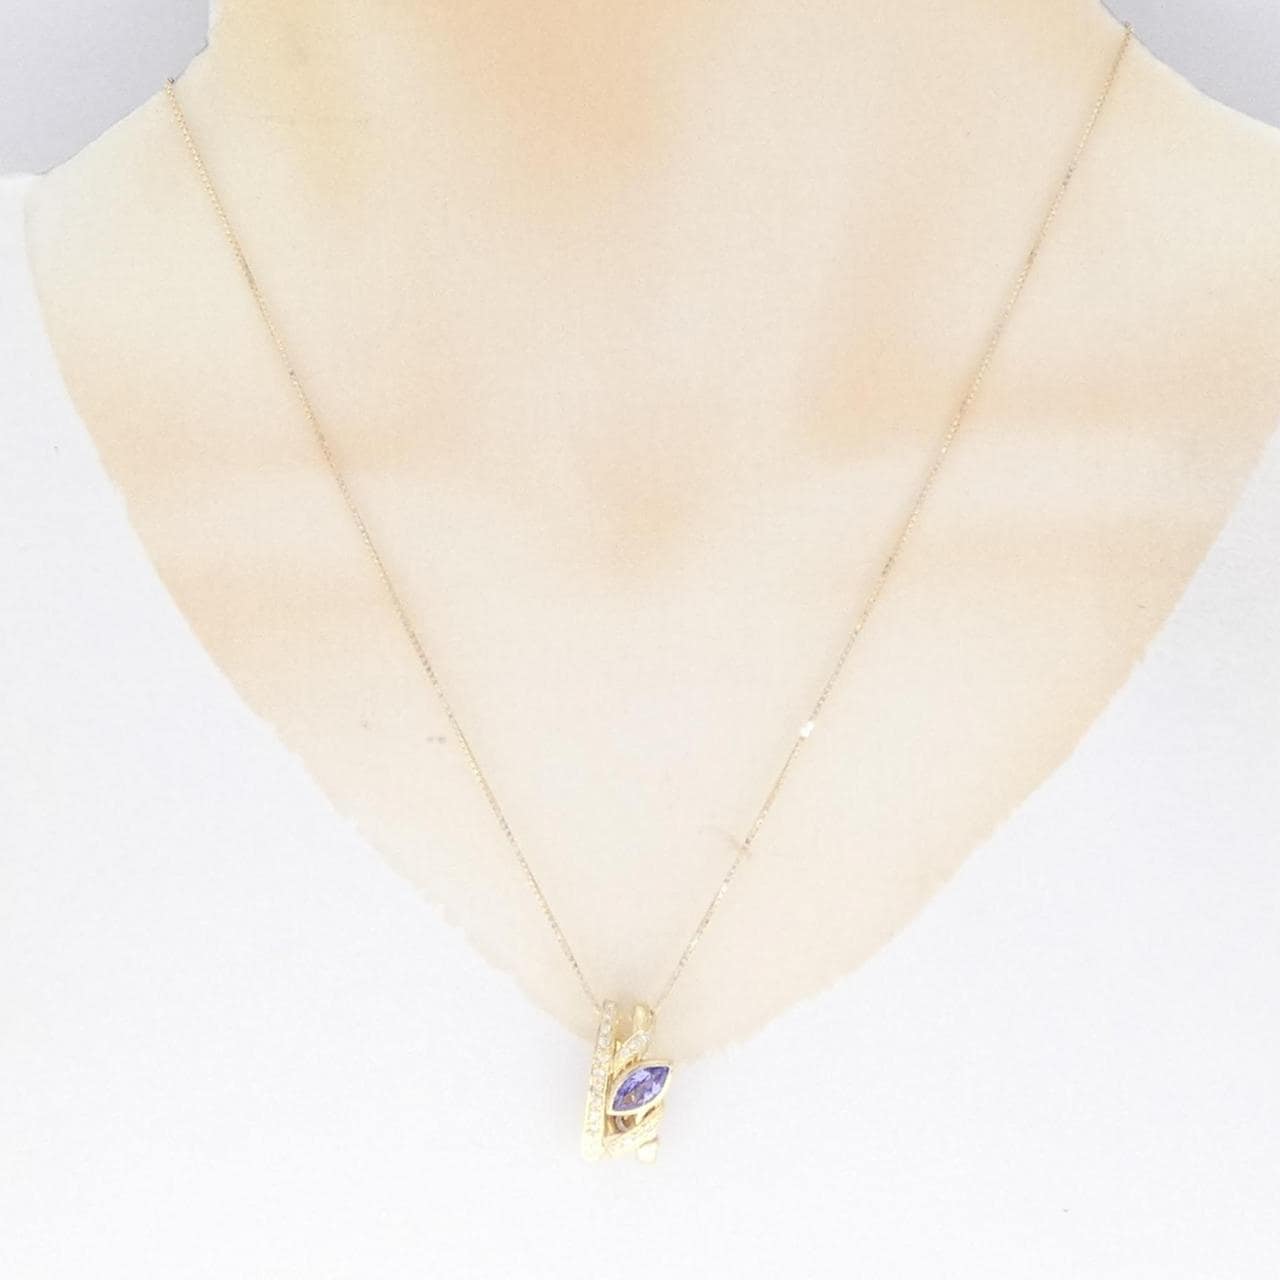 K18YG Tanzanite necklace 0.562CT